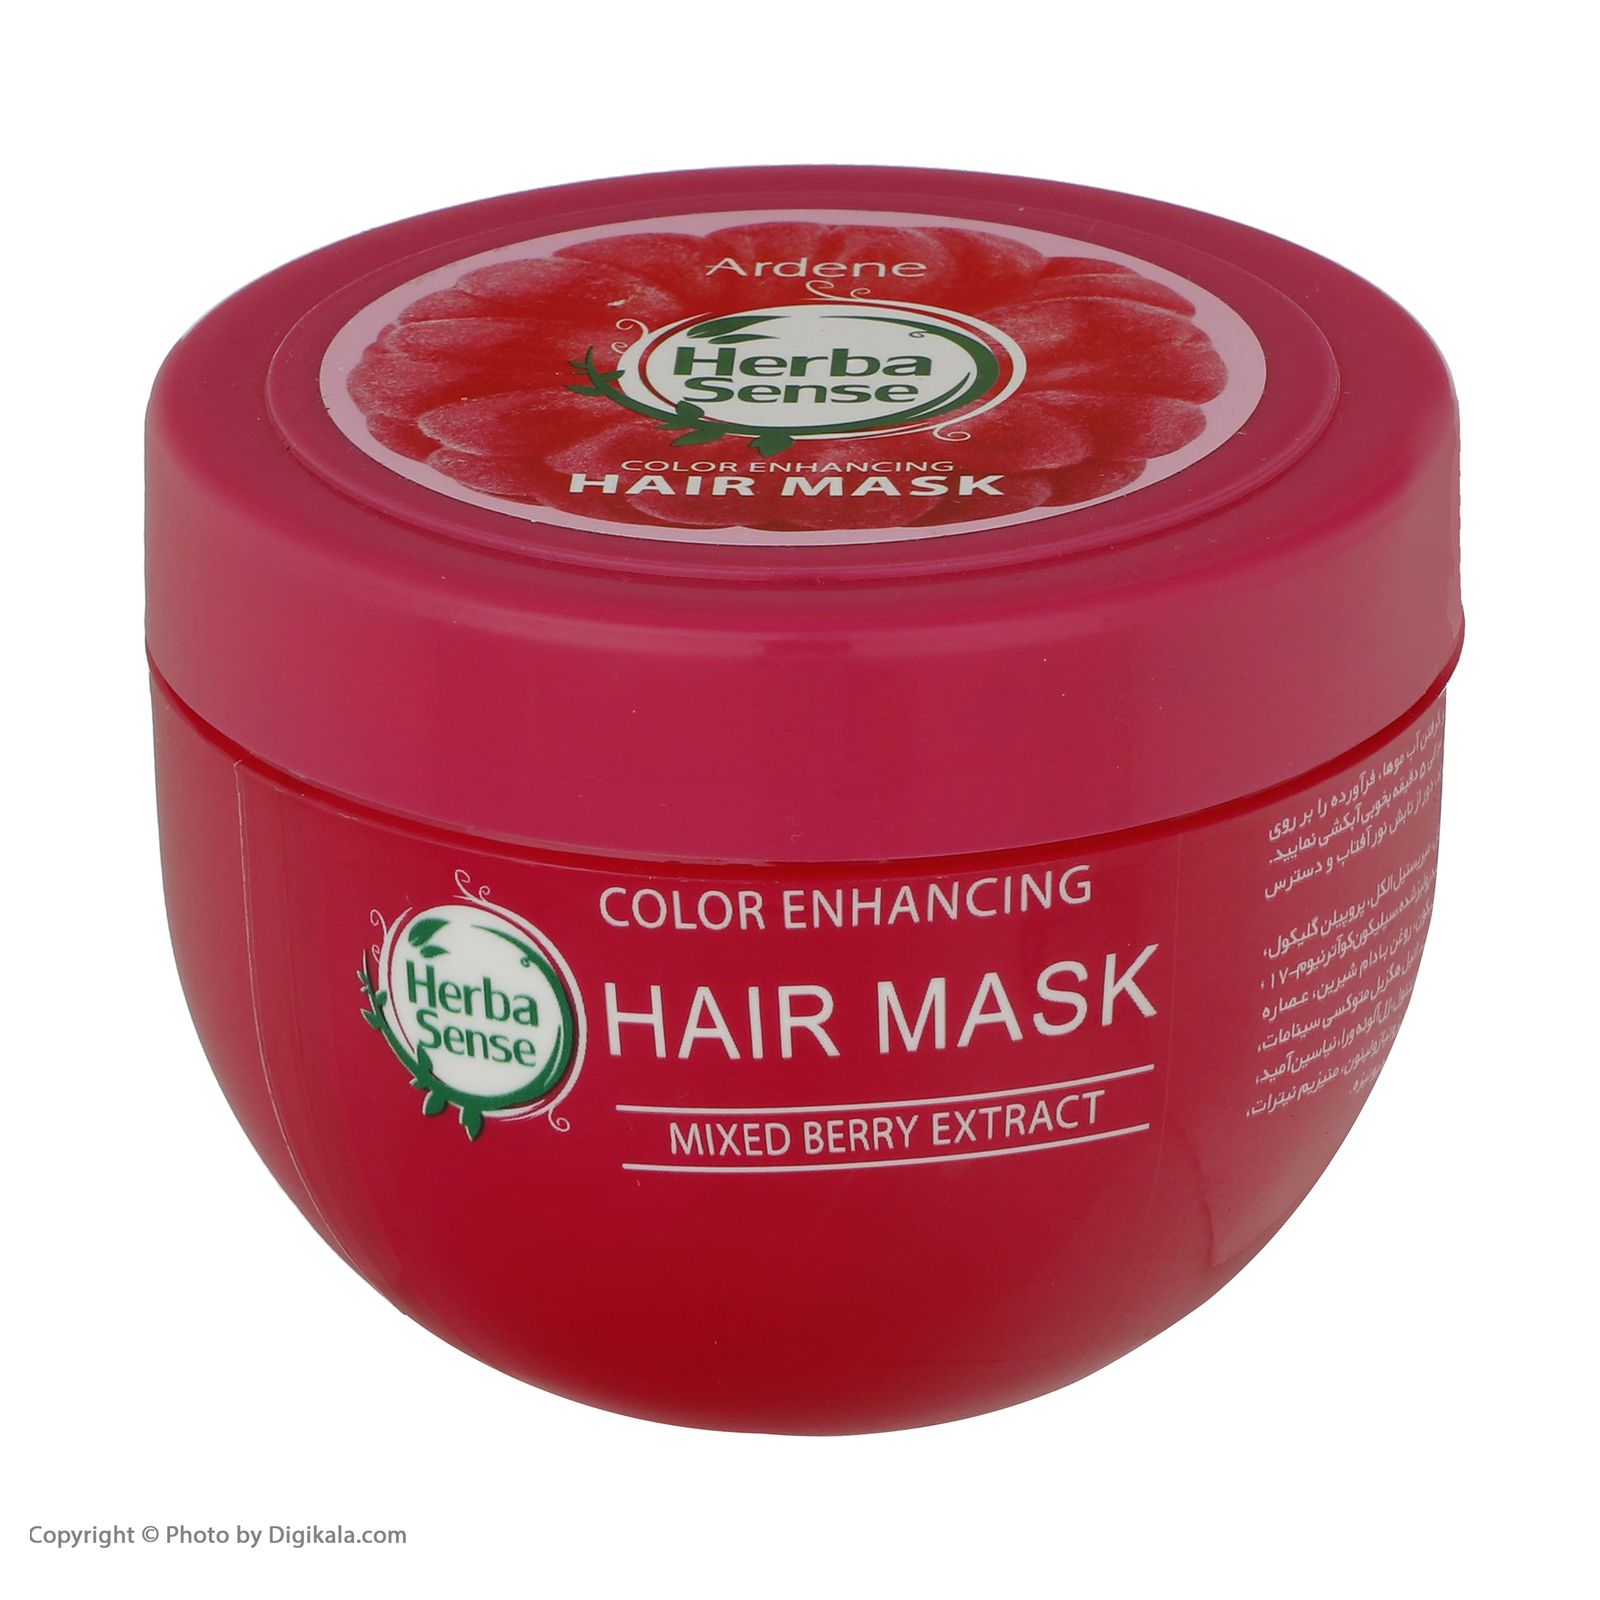 ماسک مو آردن هرباسنس مدل تثبیت کننده رنگ مو حجم 250 میلی لیتر -  - 5